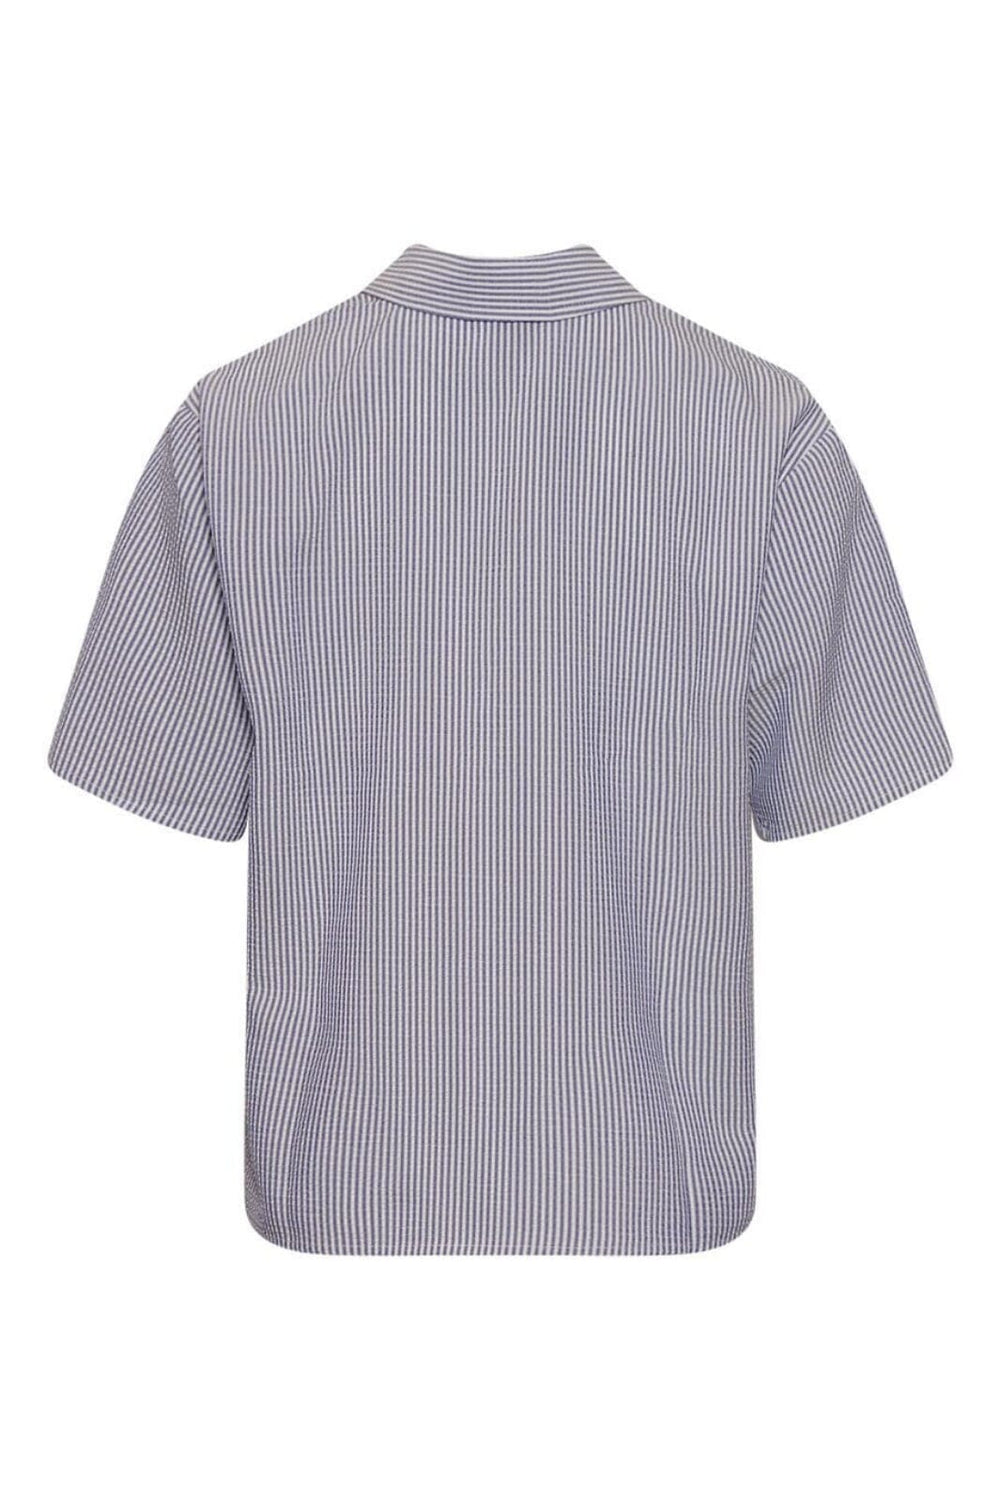 Noella - Sabine Shirt - Blue Stripe Skjorter 